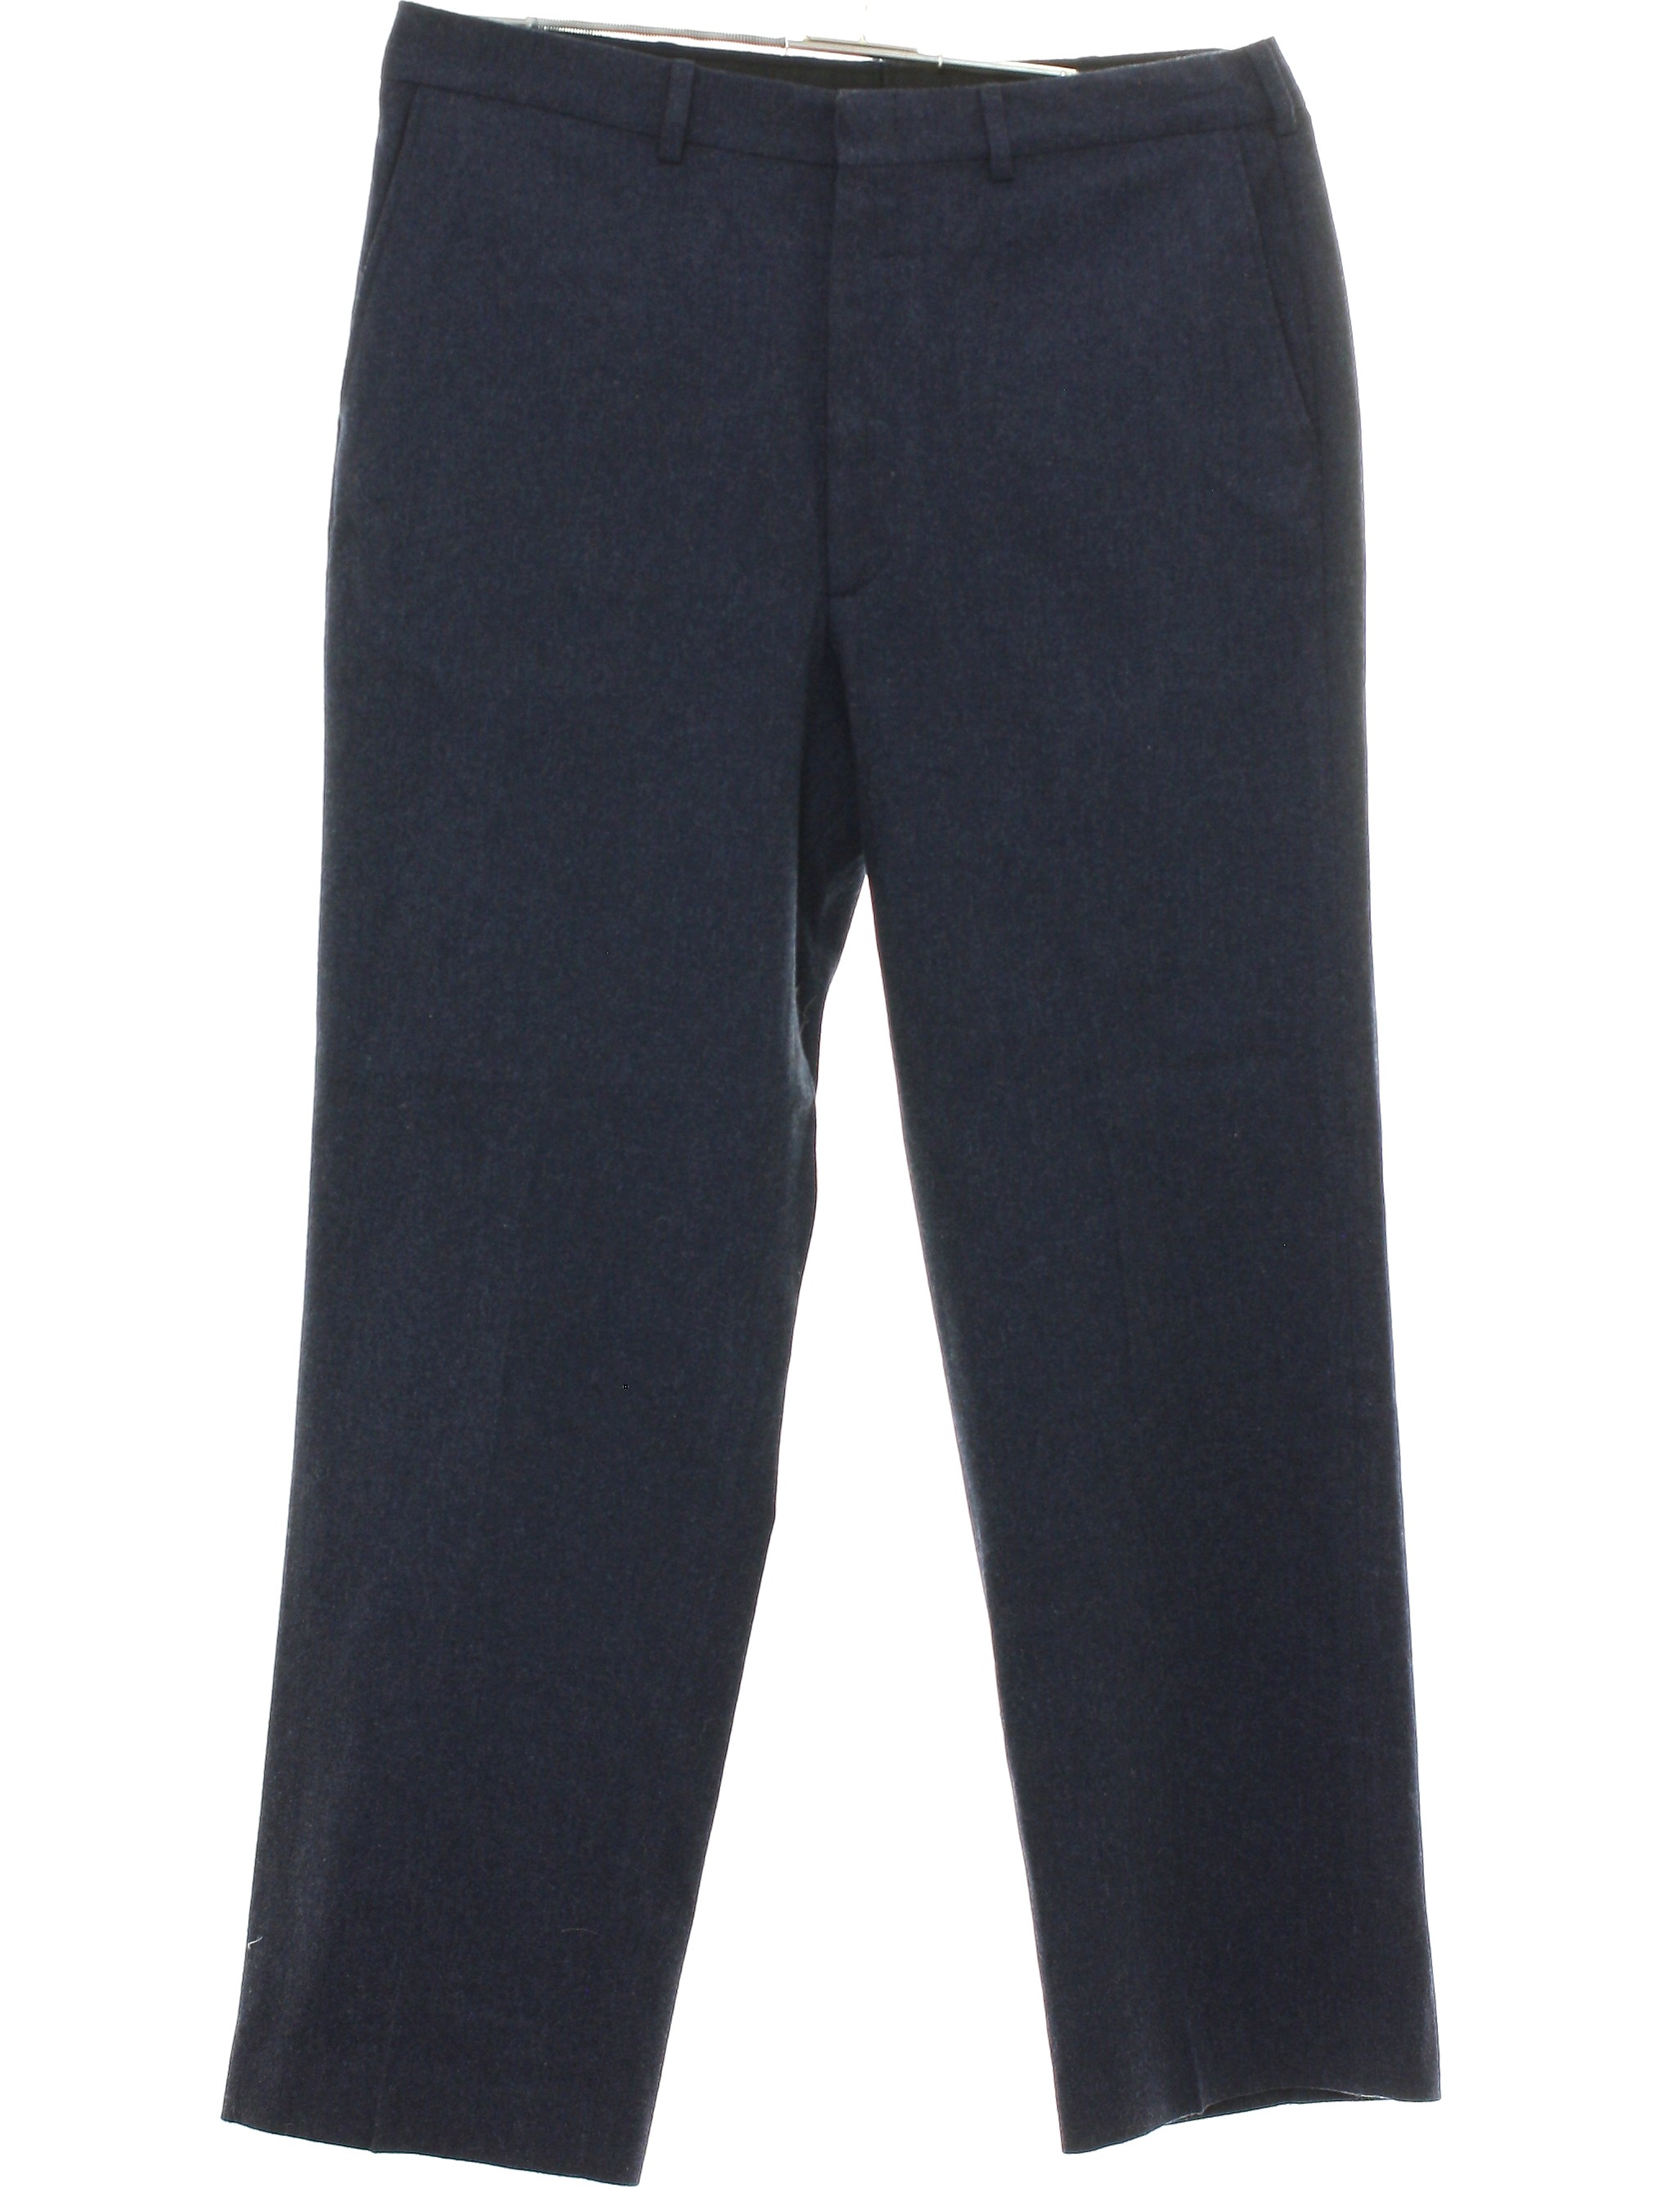 80s Retro Pants: Early 80s -Farah- Mens hazy navy blue solid colored ...